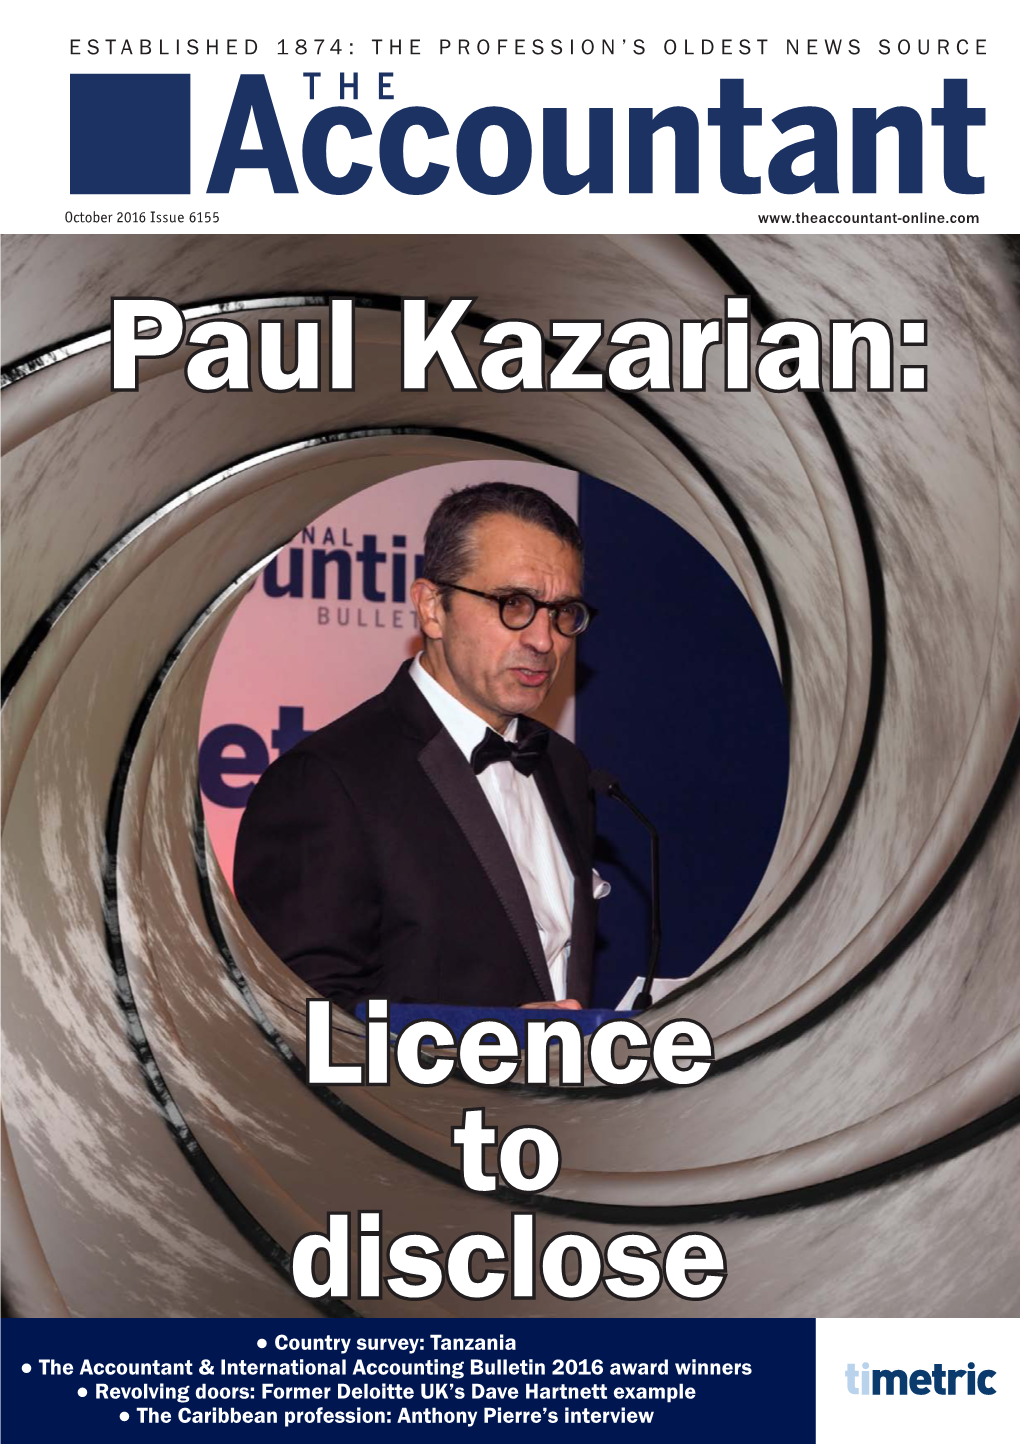 Paul Kazarian Q&A Session at the Accountant & International